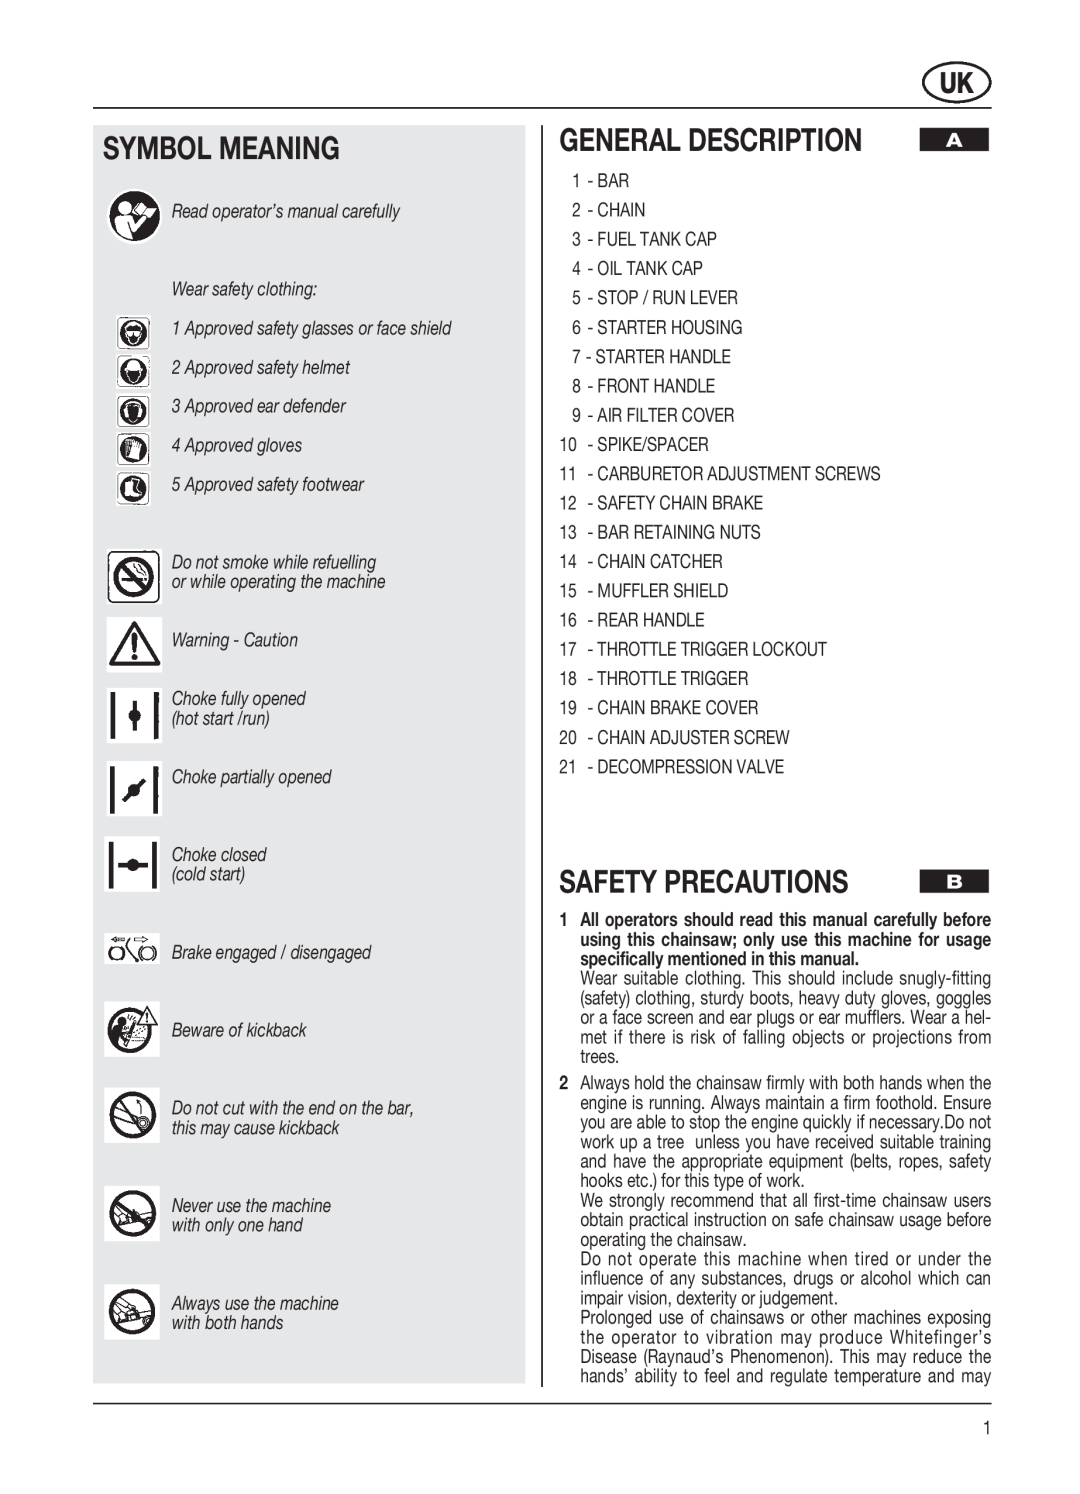 McCulloch PRO MAC 61 59 CC, PRO MAC 54 54 CC Symbol Meaning, General Description, Safety Precautions, Warning - Caution 